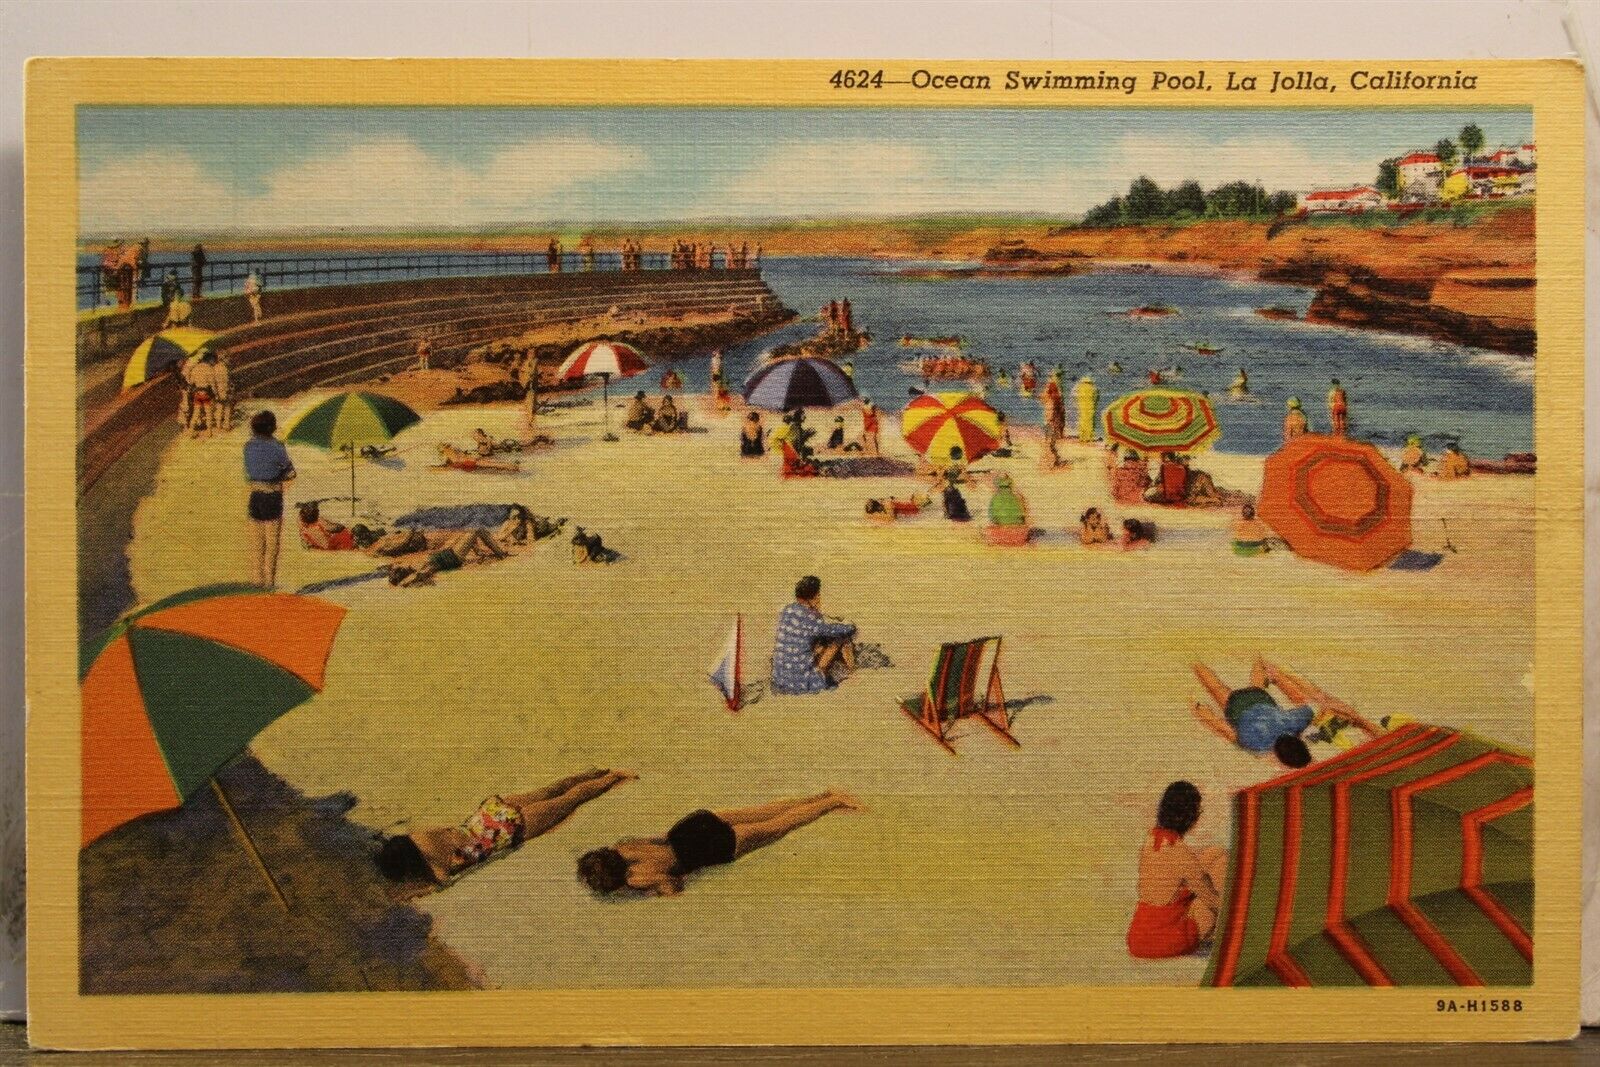 California Ca La Jolla Ocean Swimming Pool Postcard Old Vintage Card View Postal